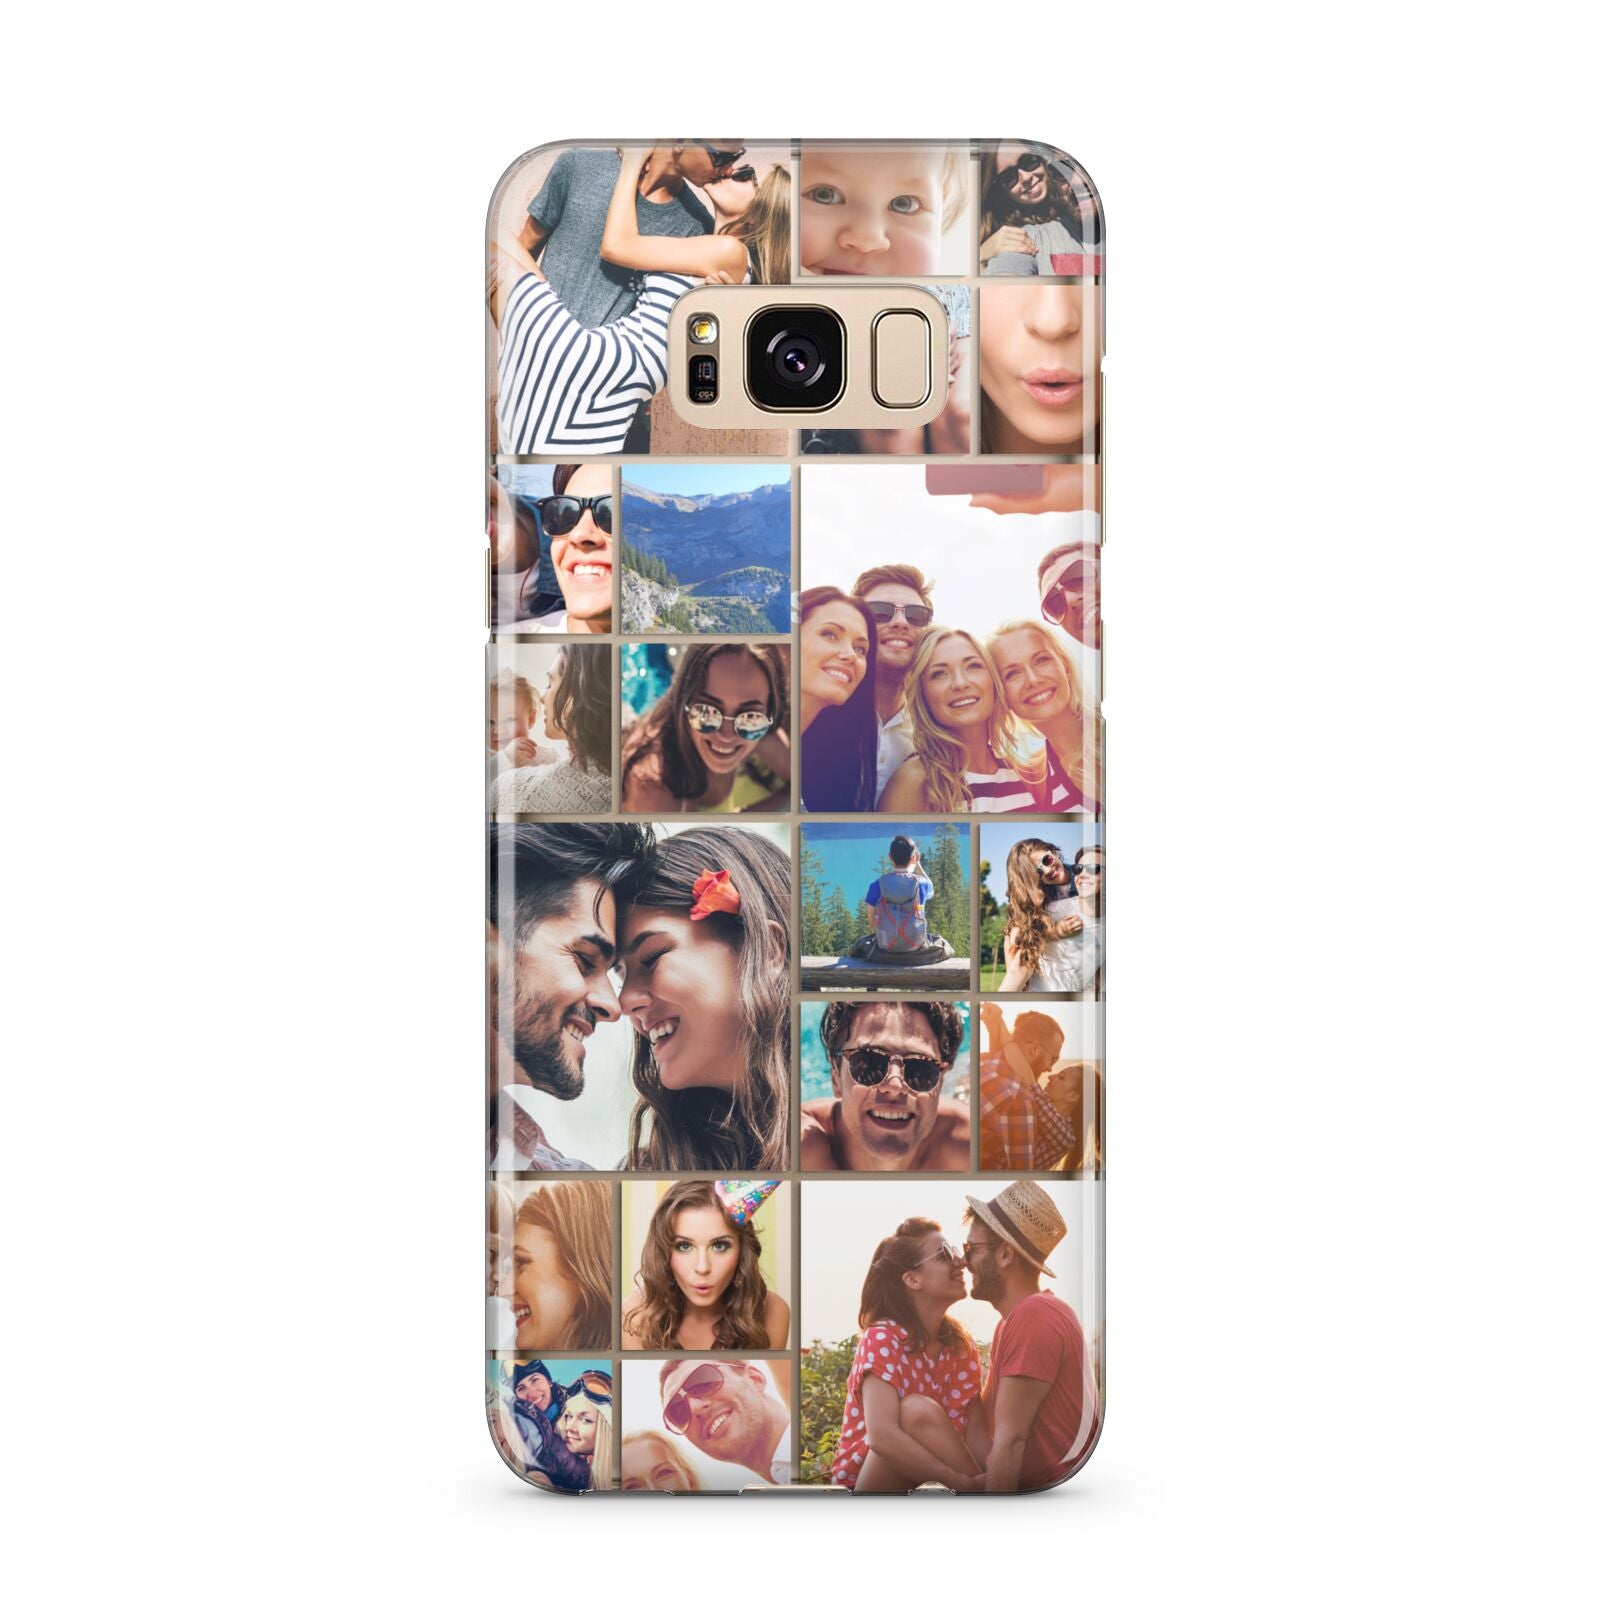 Photo Grid Samsung Galaxy S8 Plus Case